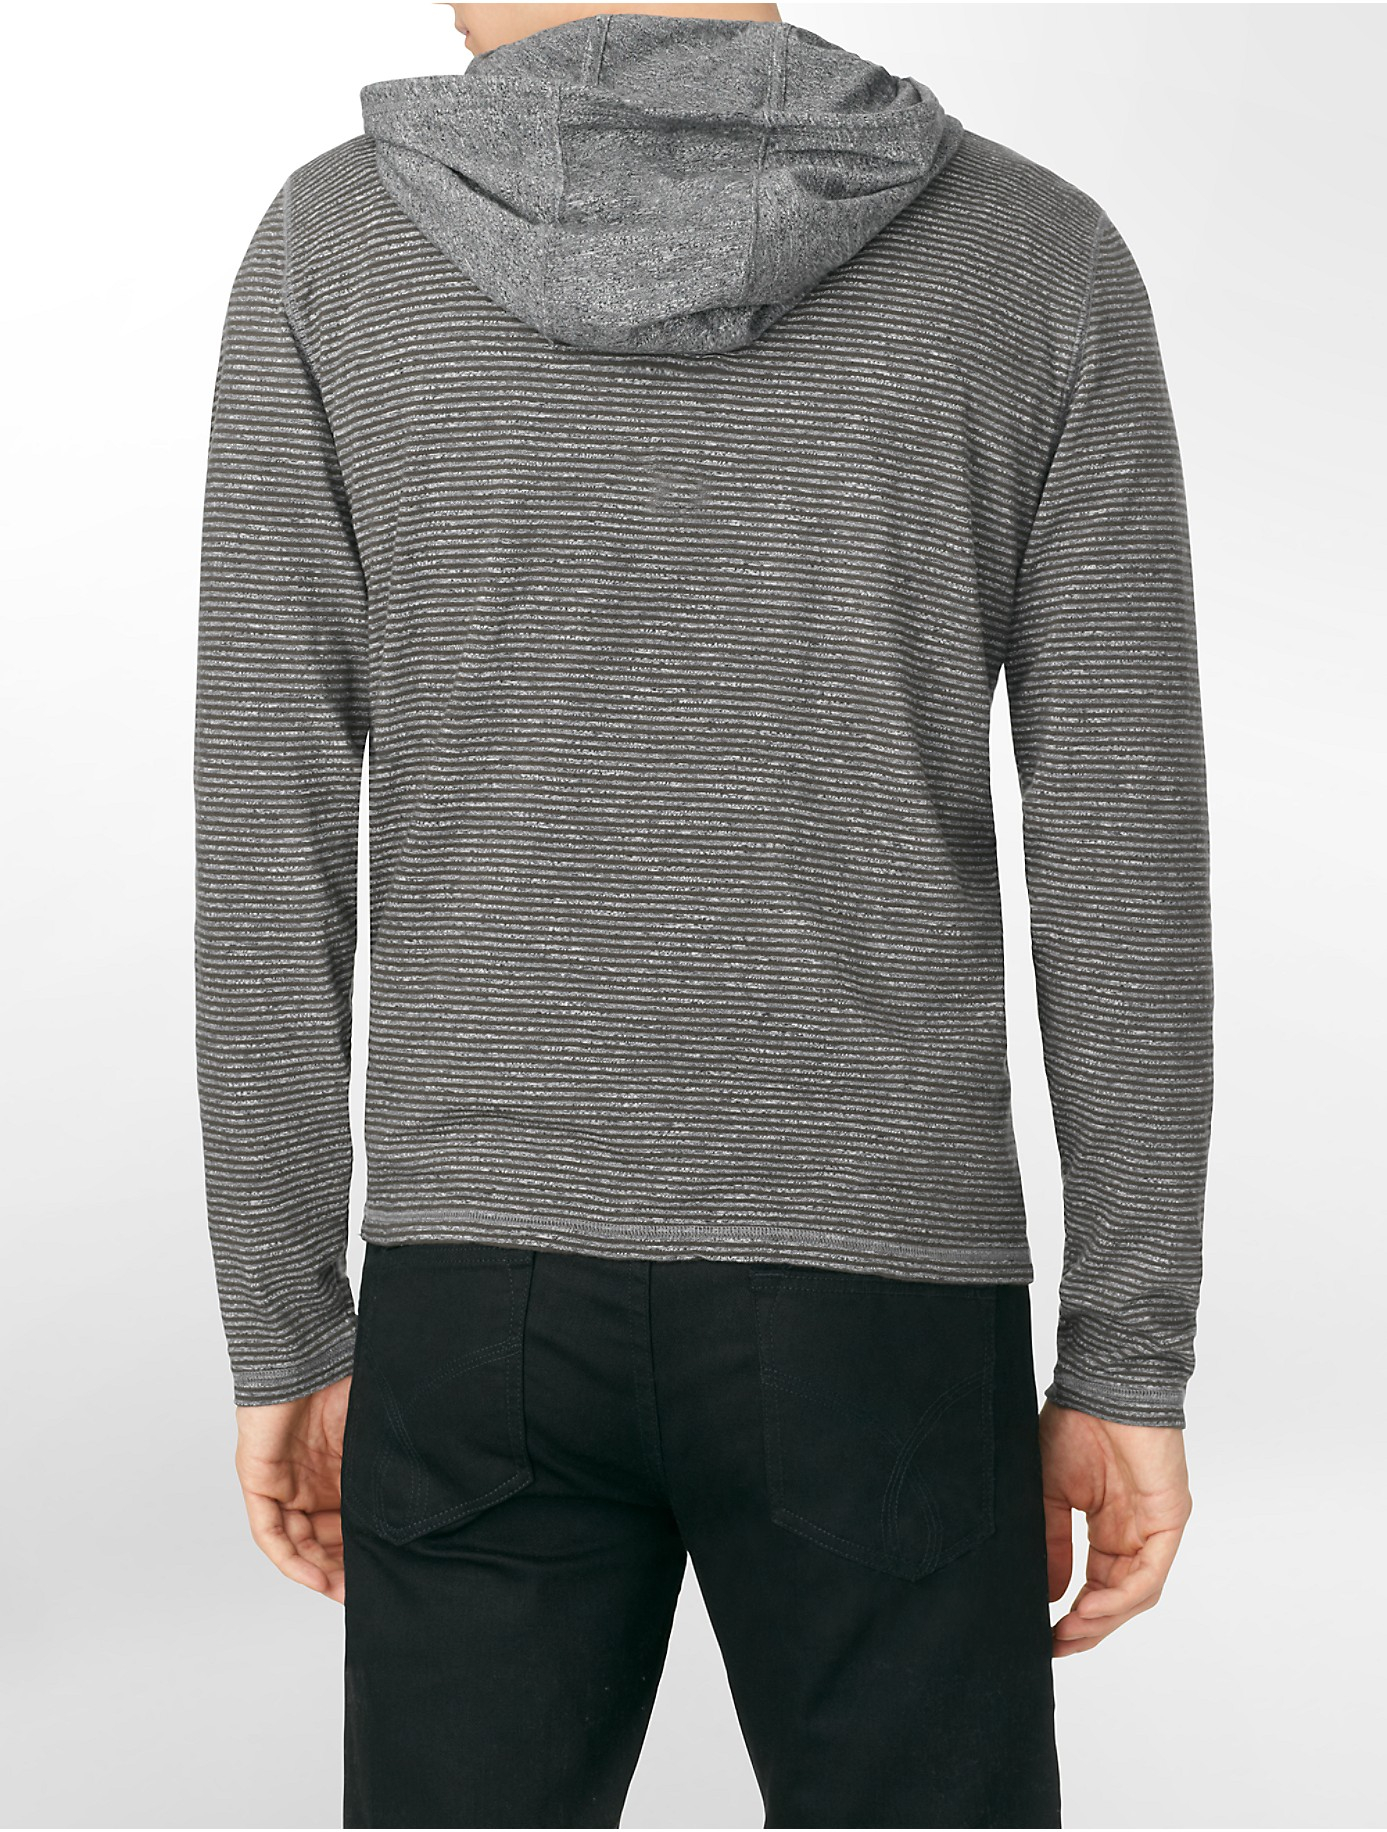 Lyst - Calvin klein Striped Cotton Hoodie in Gray for Men